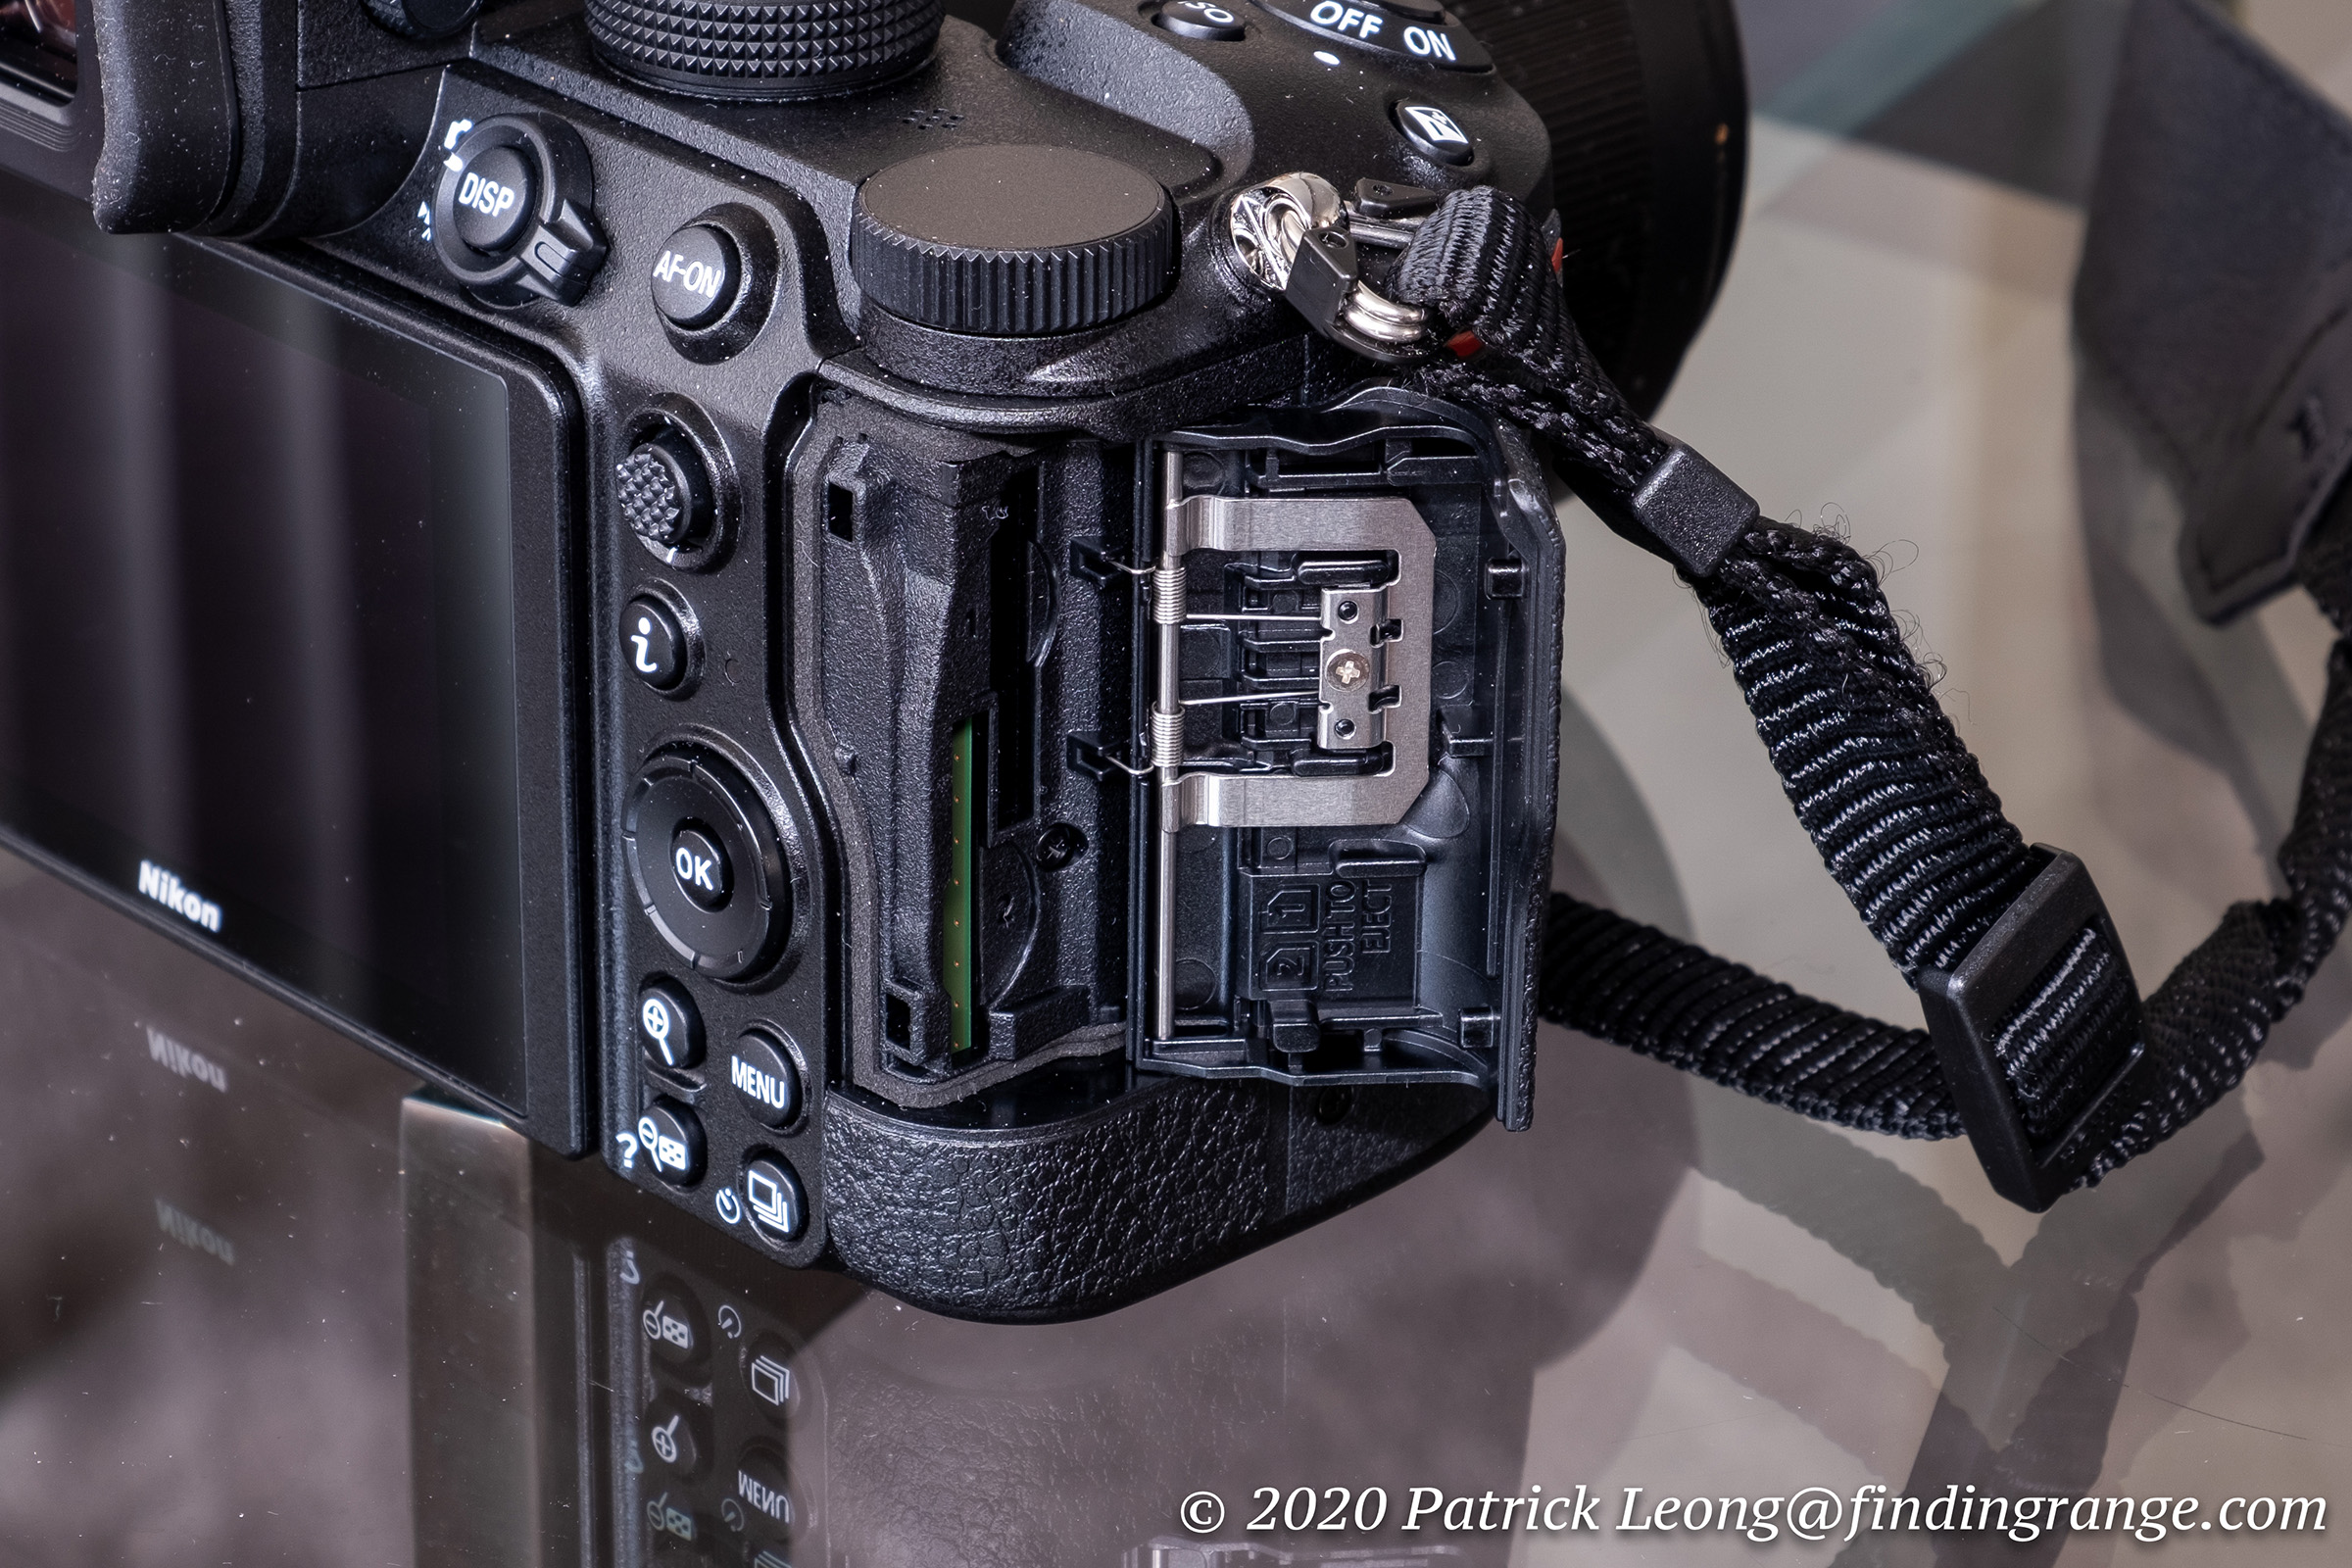 Nikon Z5 - Budget Full Frame On Steroids